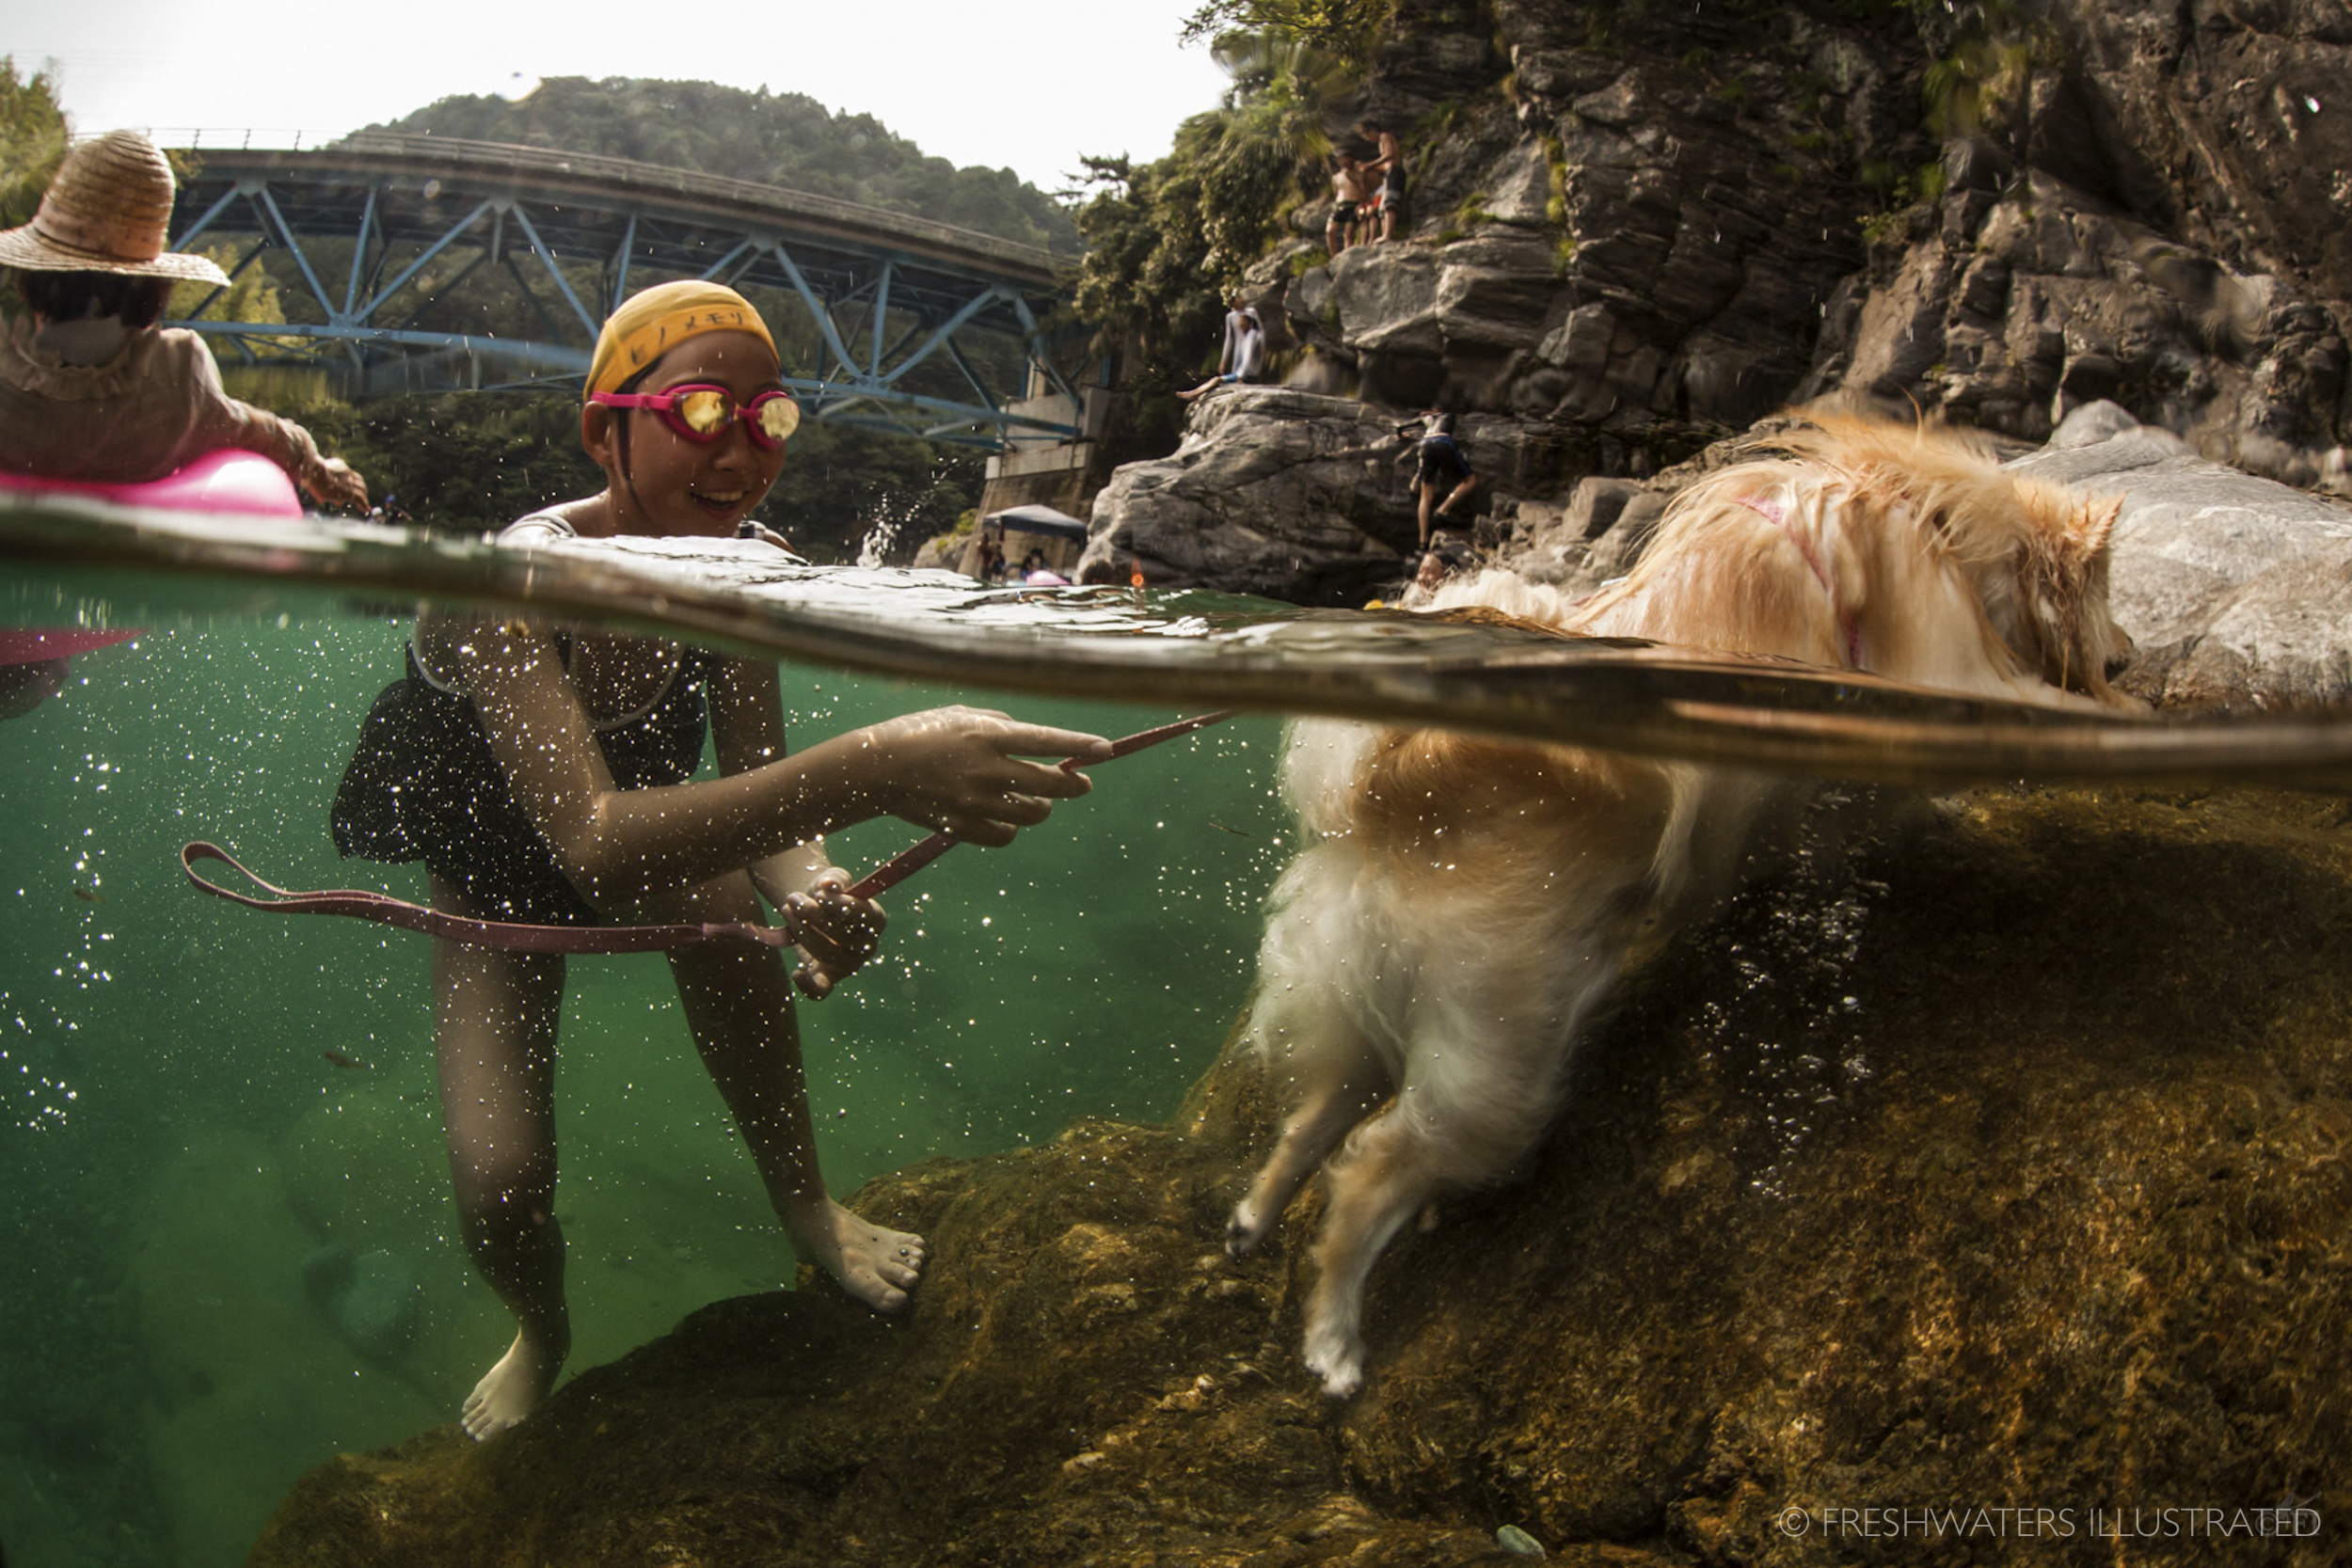  Teaching the dog to swim Kamo River, Japan  www.FreshwatersIllustrated.org  